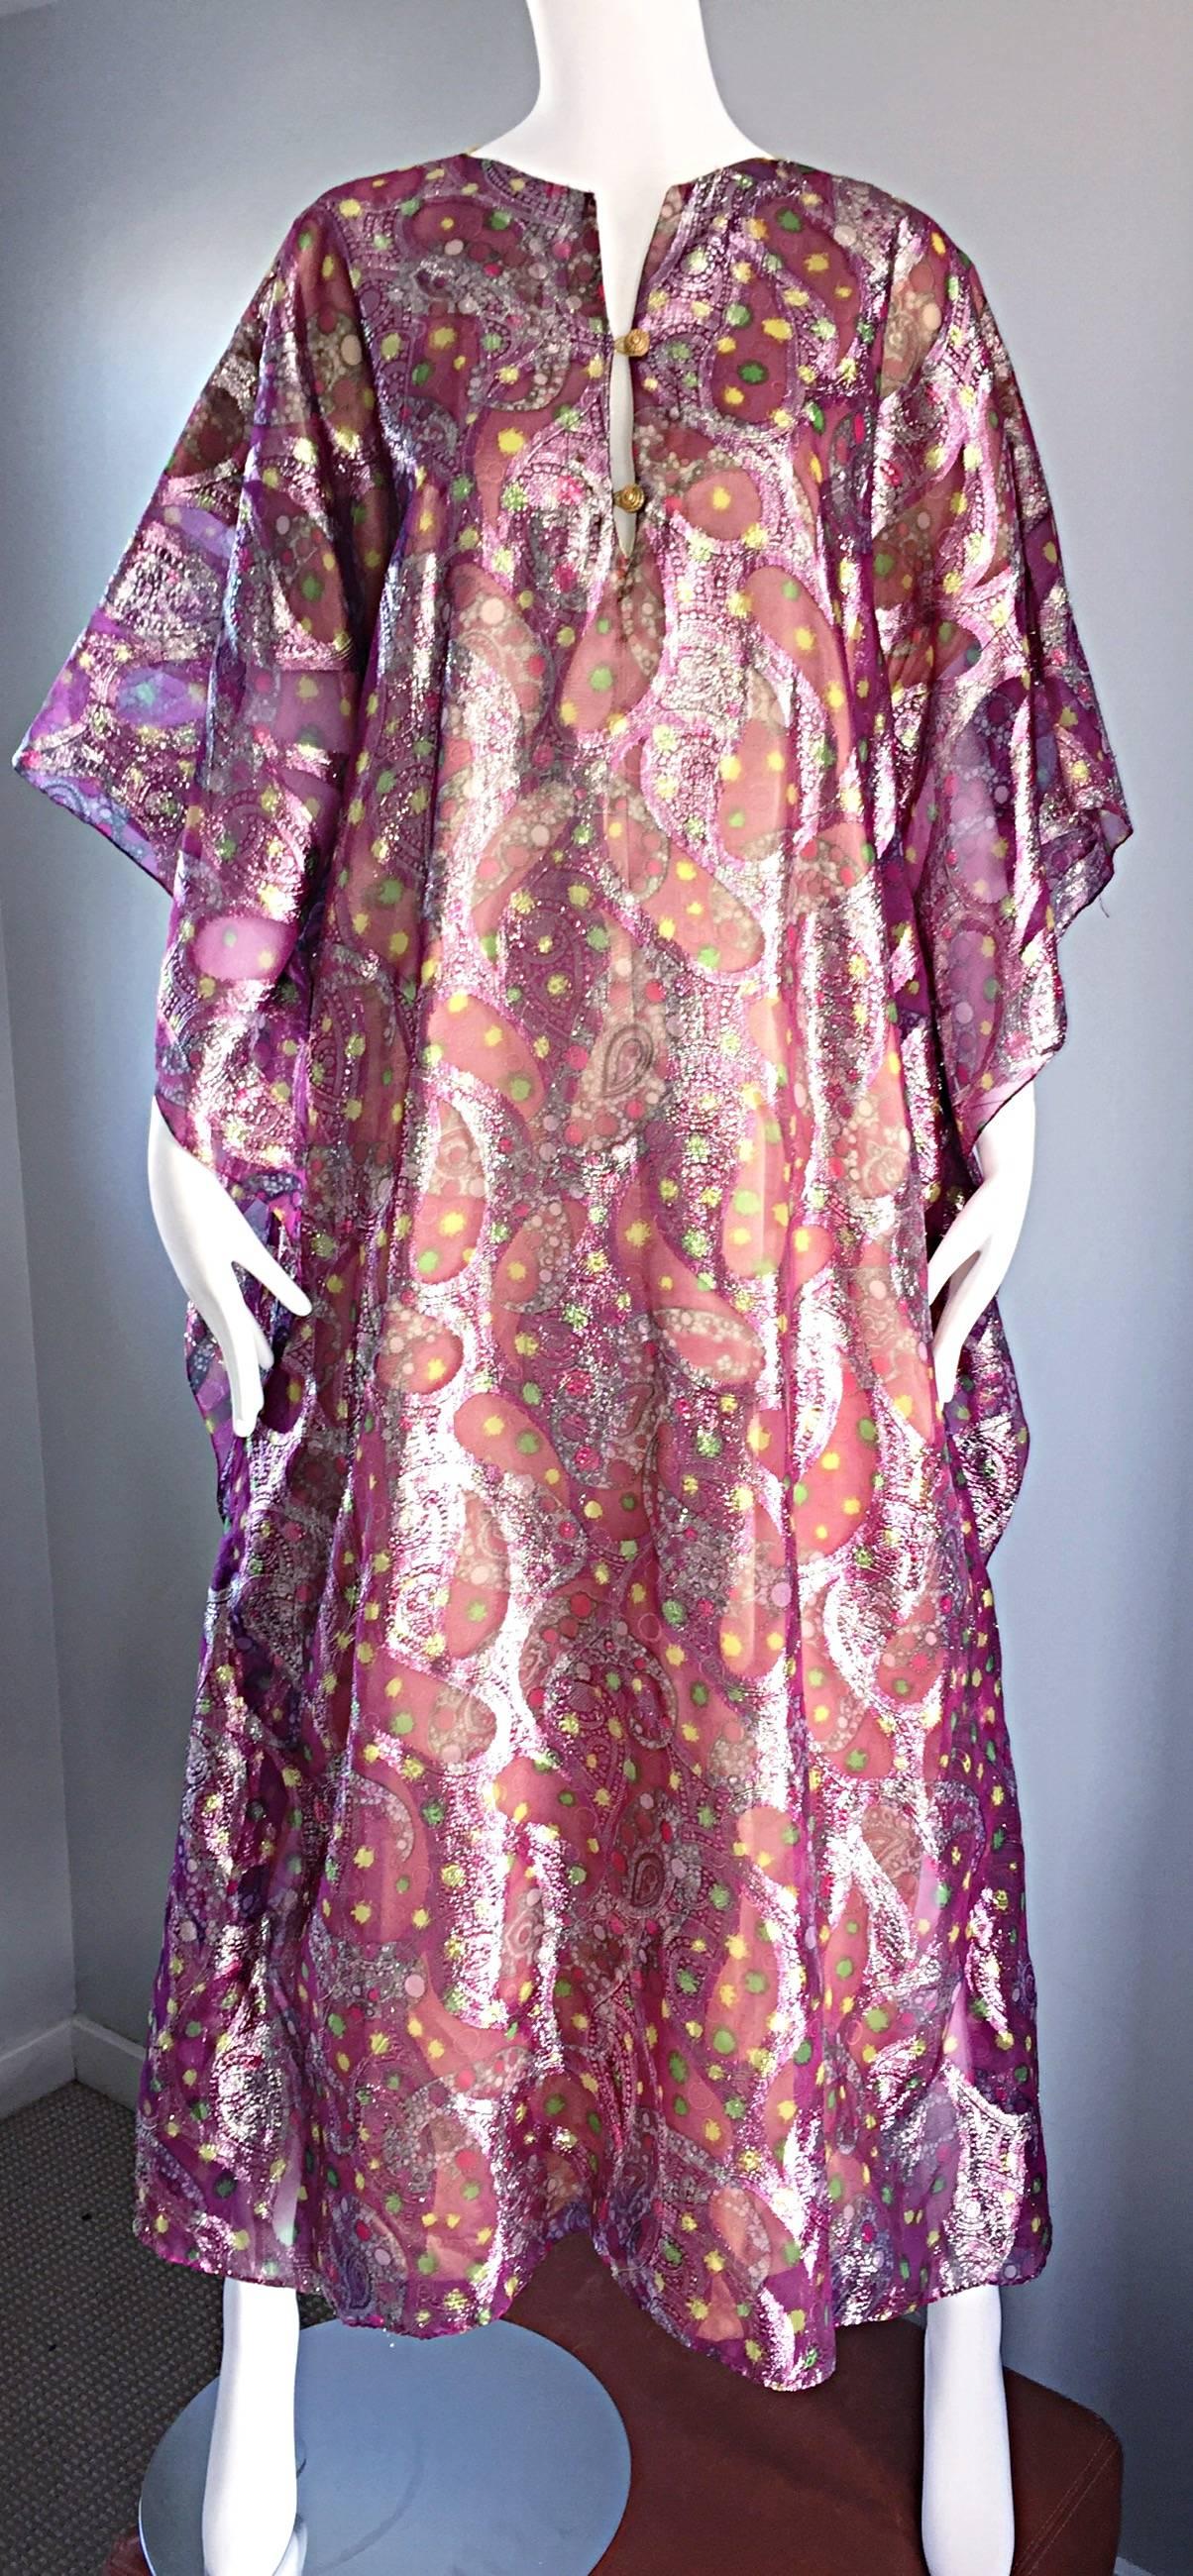 Georgie Keyloun Rare 1960s Vintage Chiffon Paisley Psychedelic 60s Caftan Dress 1